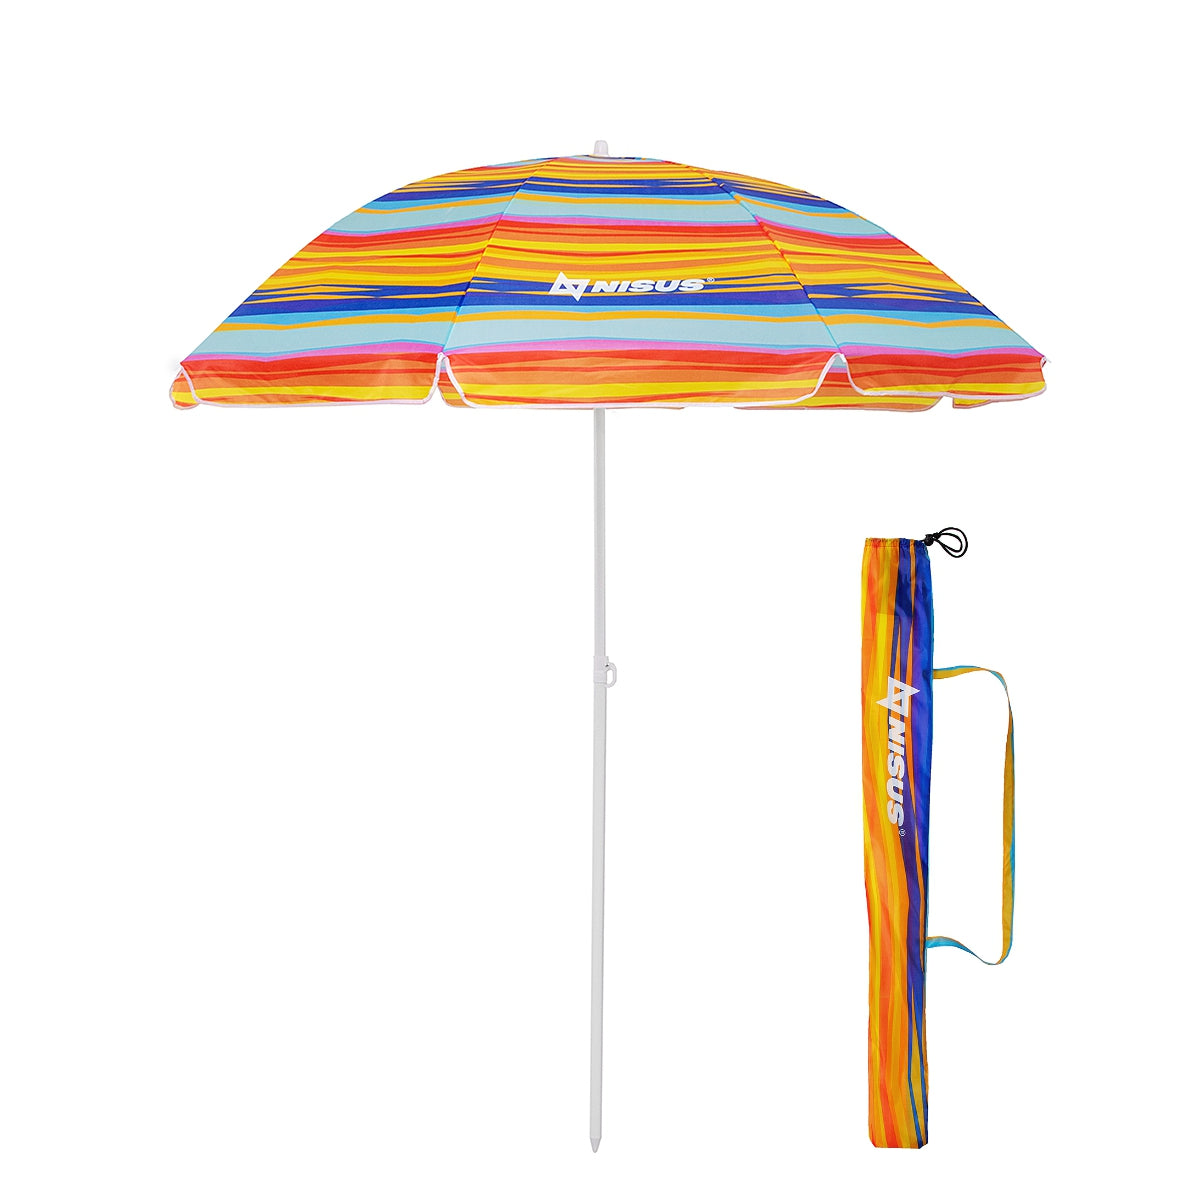 Nisus small bright folding beach umbrella with a carry bag